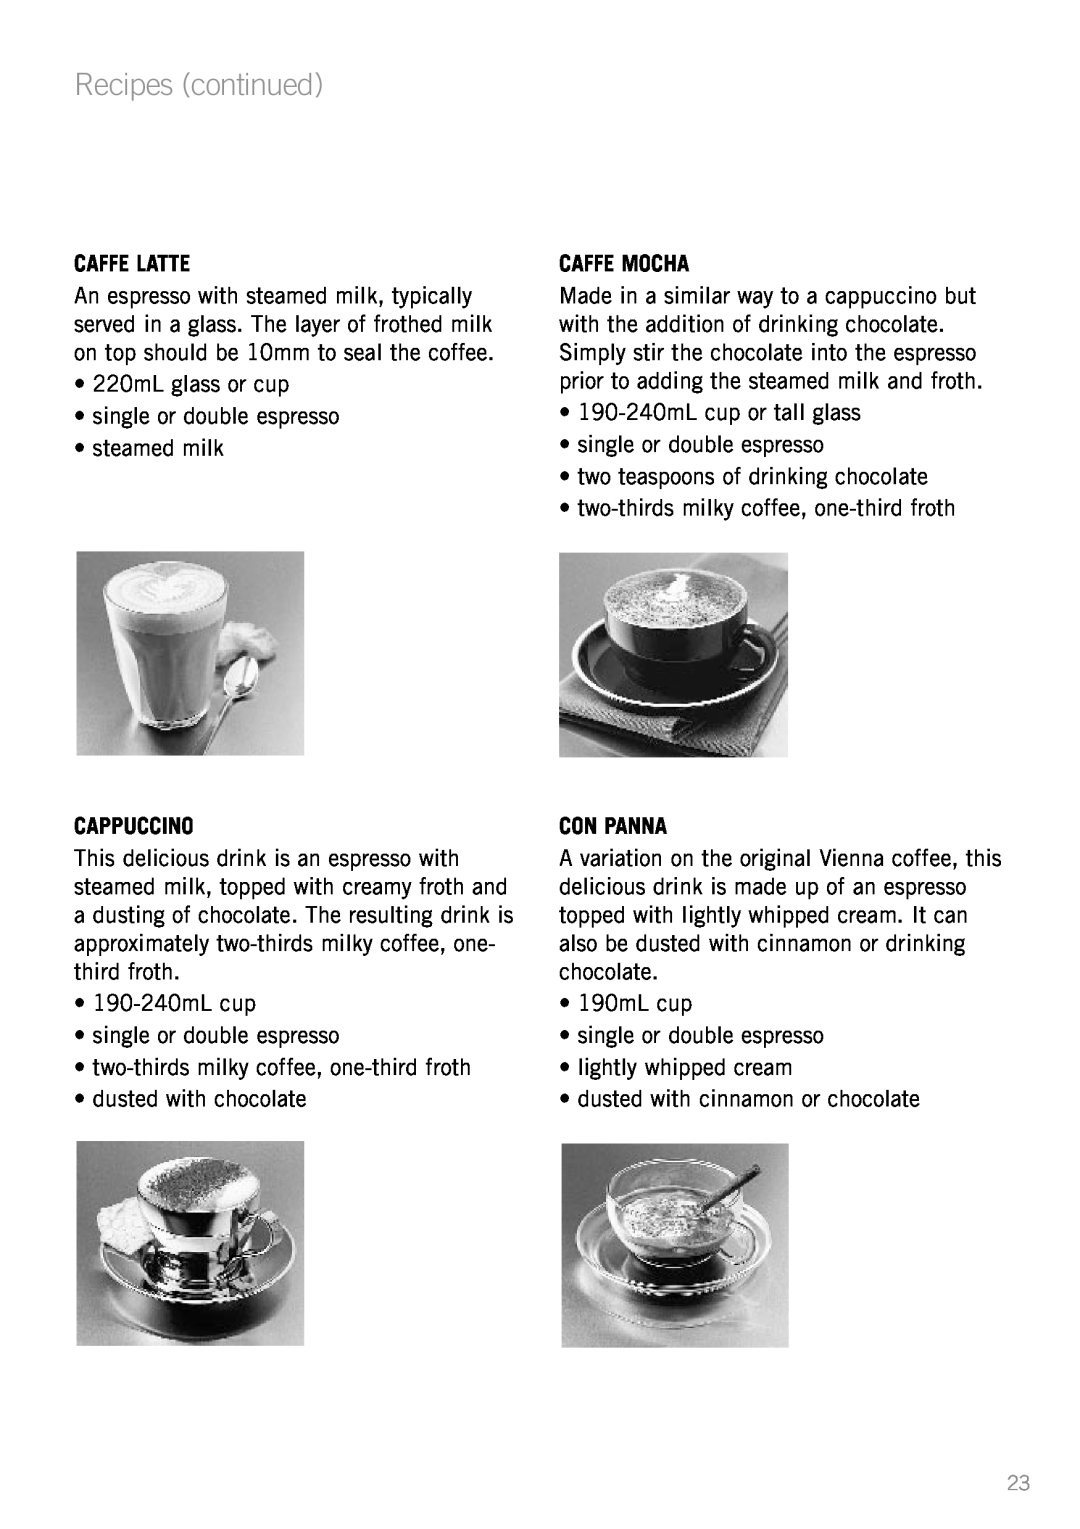 Sunbeam EM2300 manual Recipes continued, Caffe Latte, Cappuccino, Caffe Mocha, Con Panna 